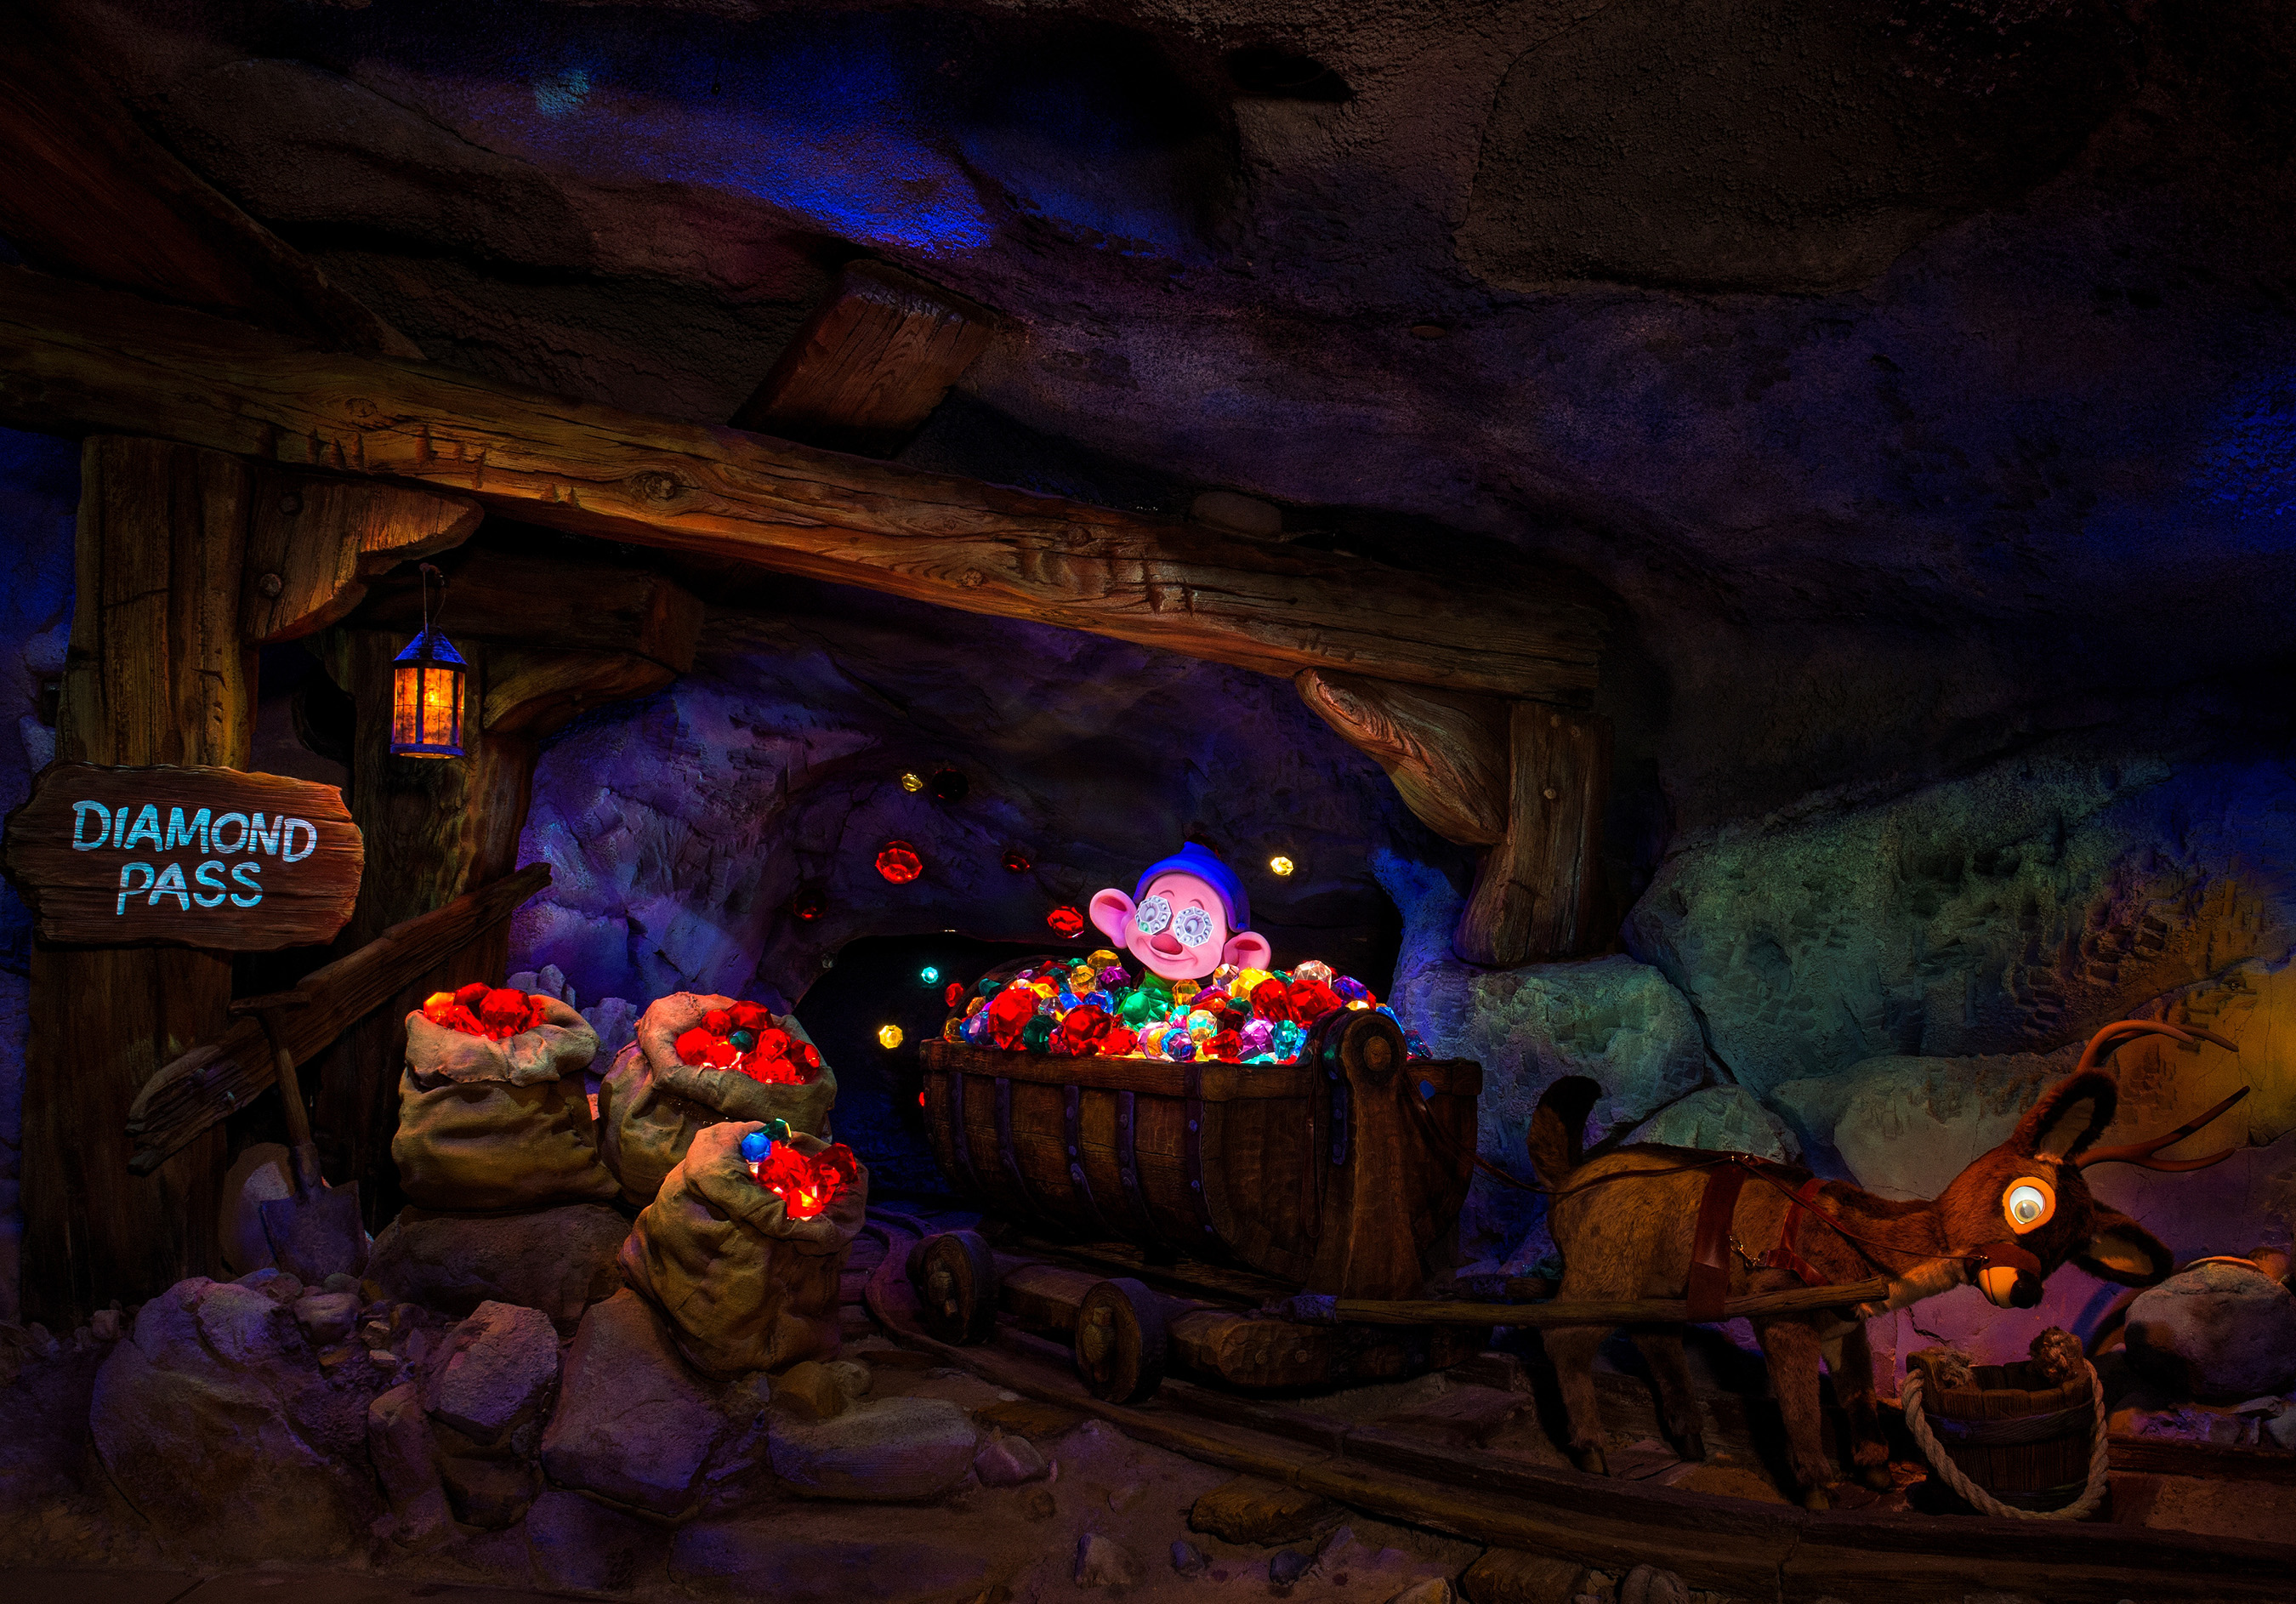 Seven Dwarfs Mine Train - Opening Date Announced